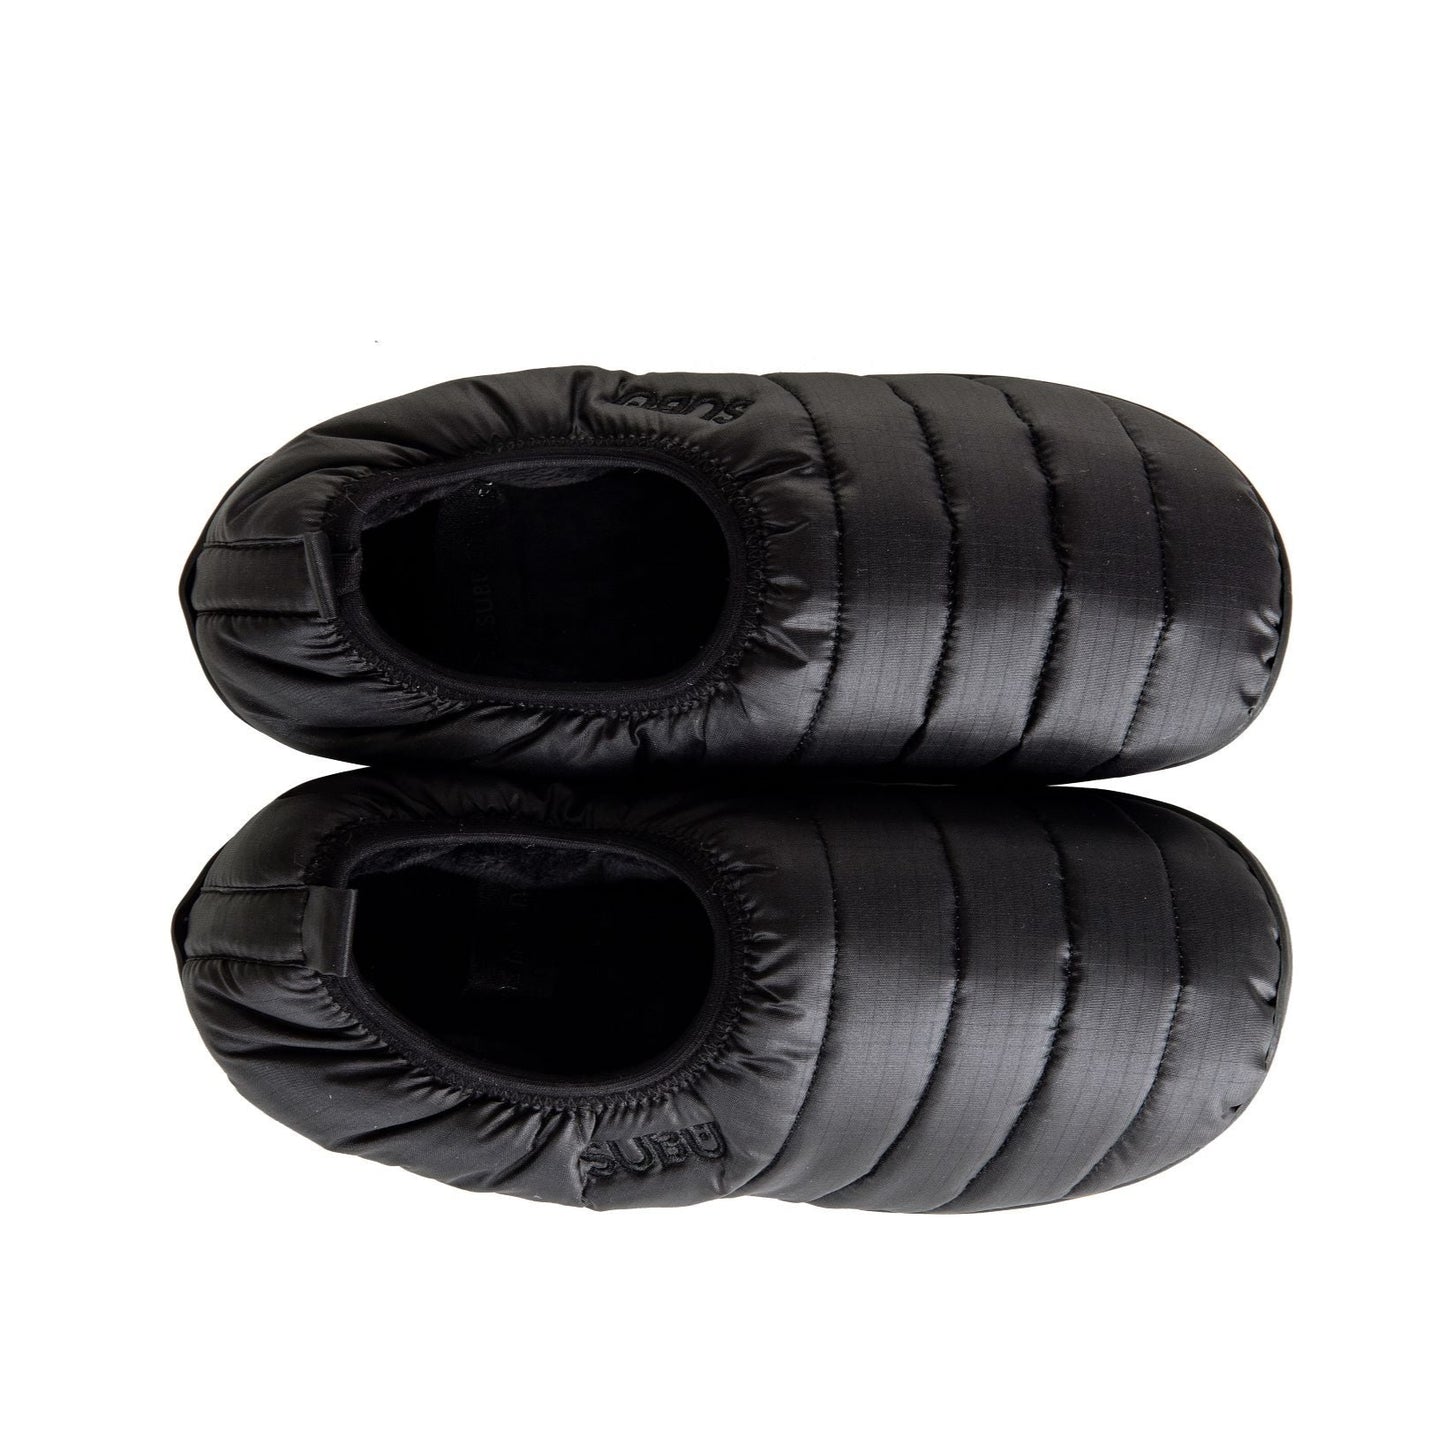 SUBU - Winter Sandal - Packbar